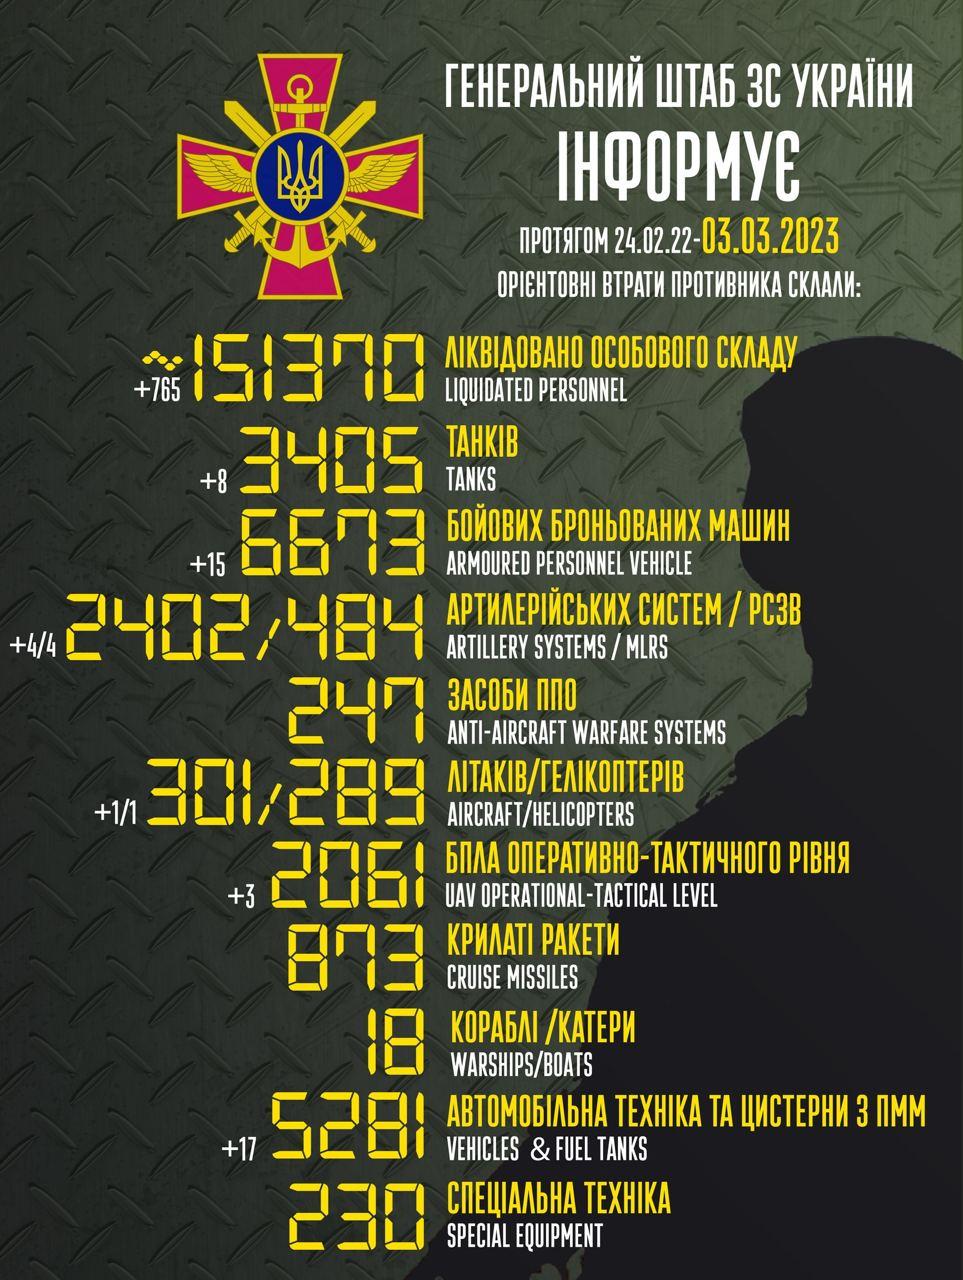 Russia’s losses in Ukraine as of 3/03/2023